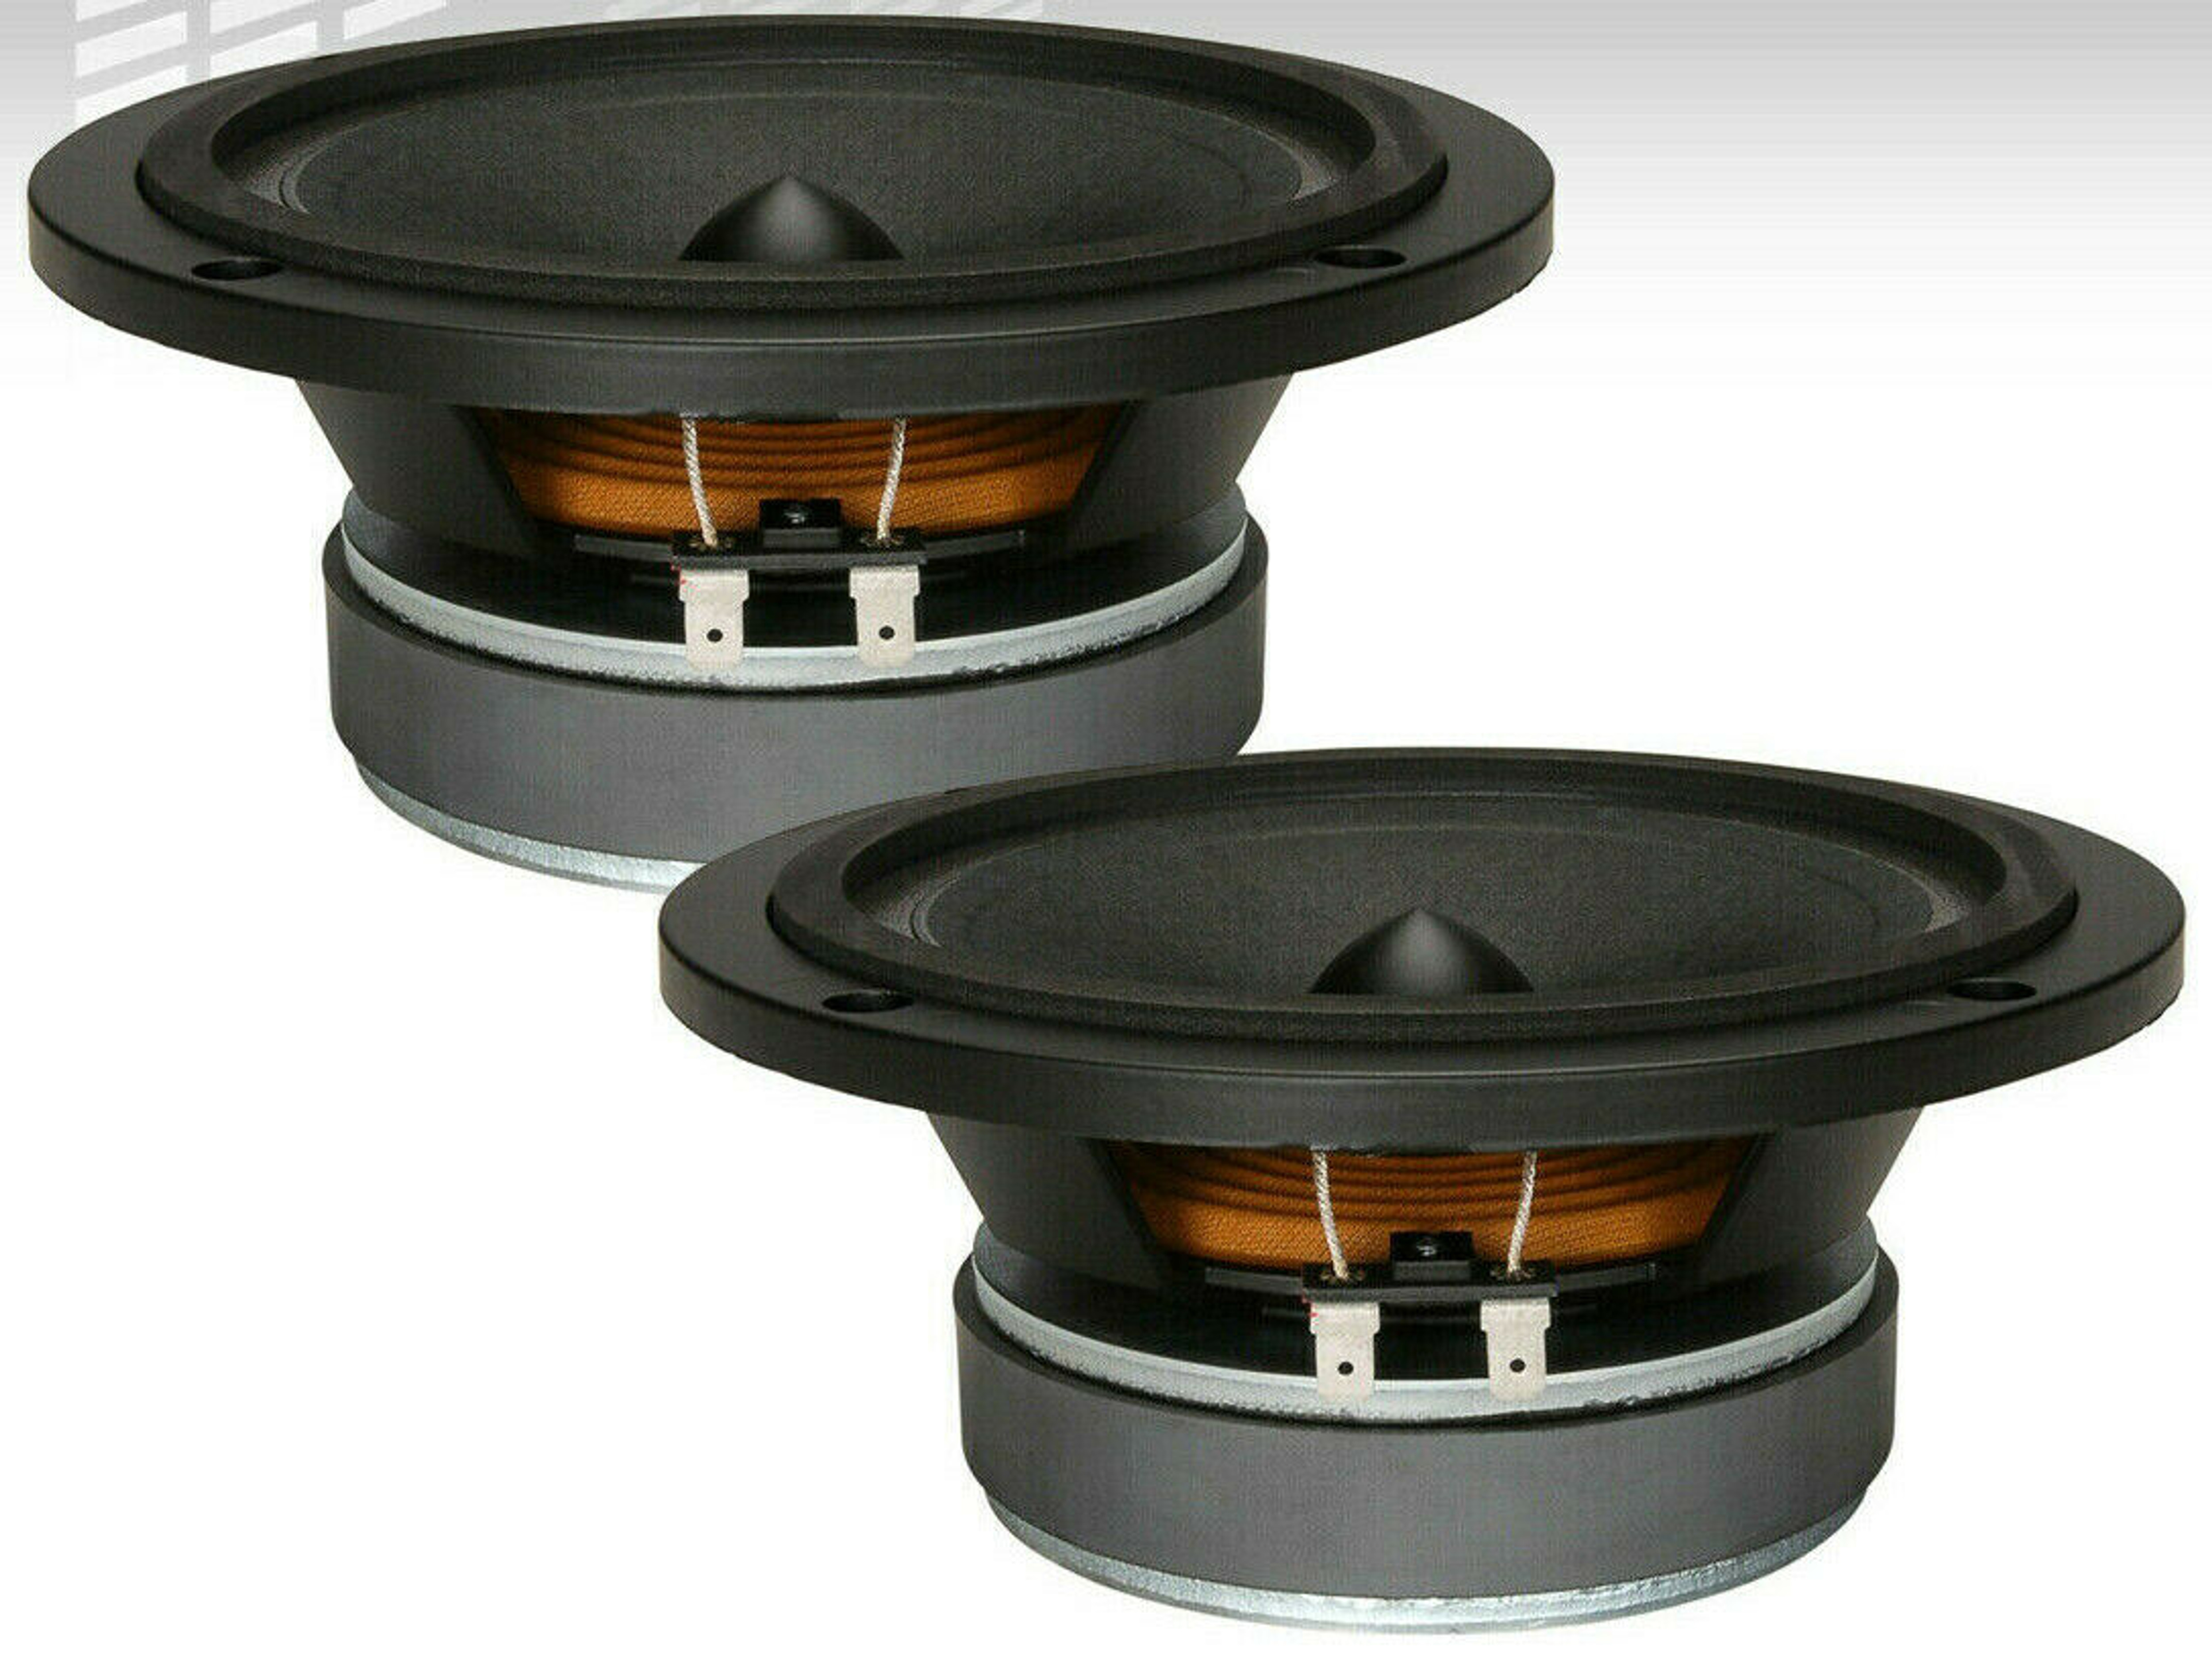 2x B&C 6PEV13 6-1/2" Midrange 240W 6.5" Replacement Speaker Woofer 8-Ohm  (PAIR)